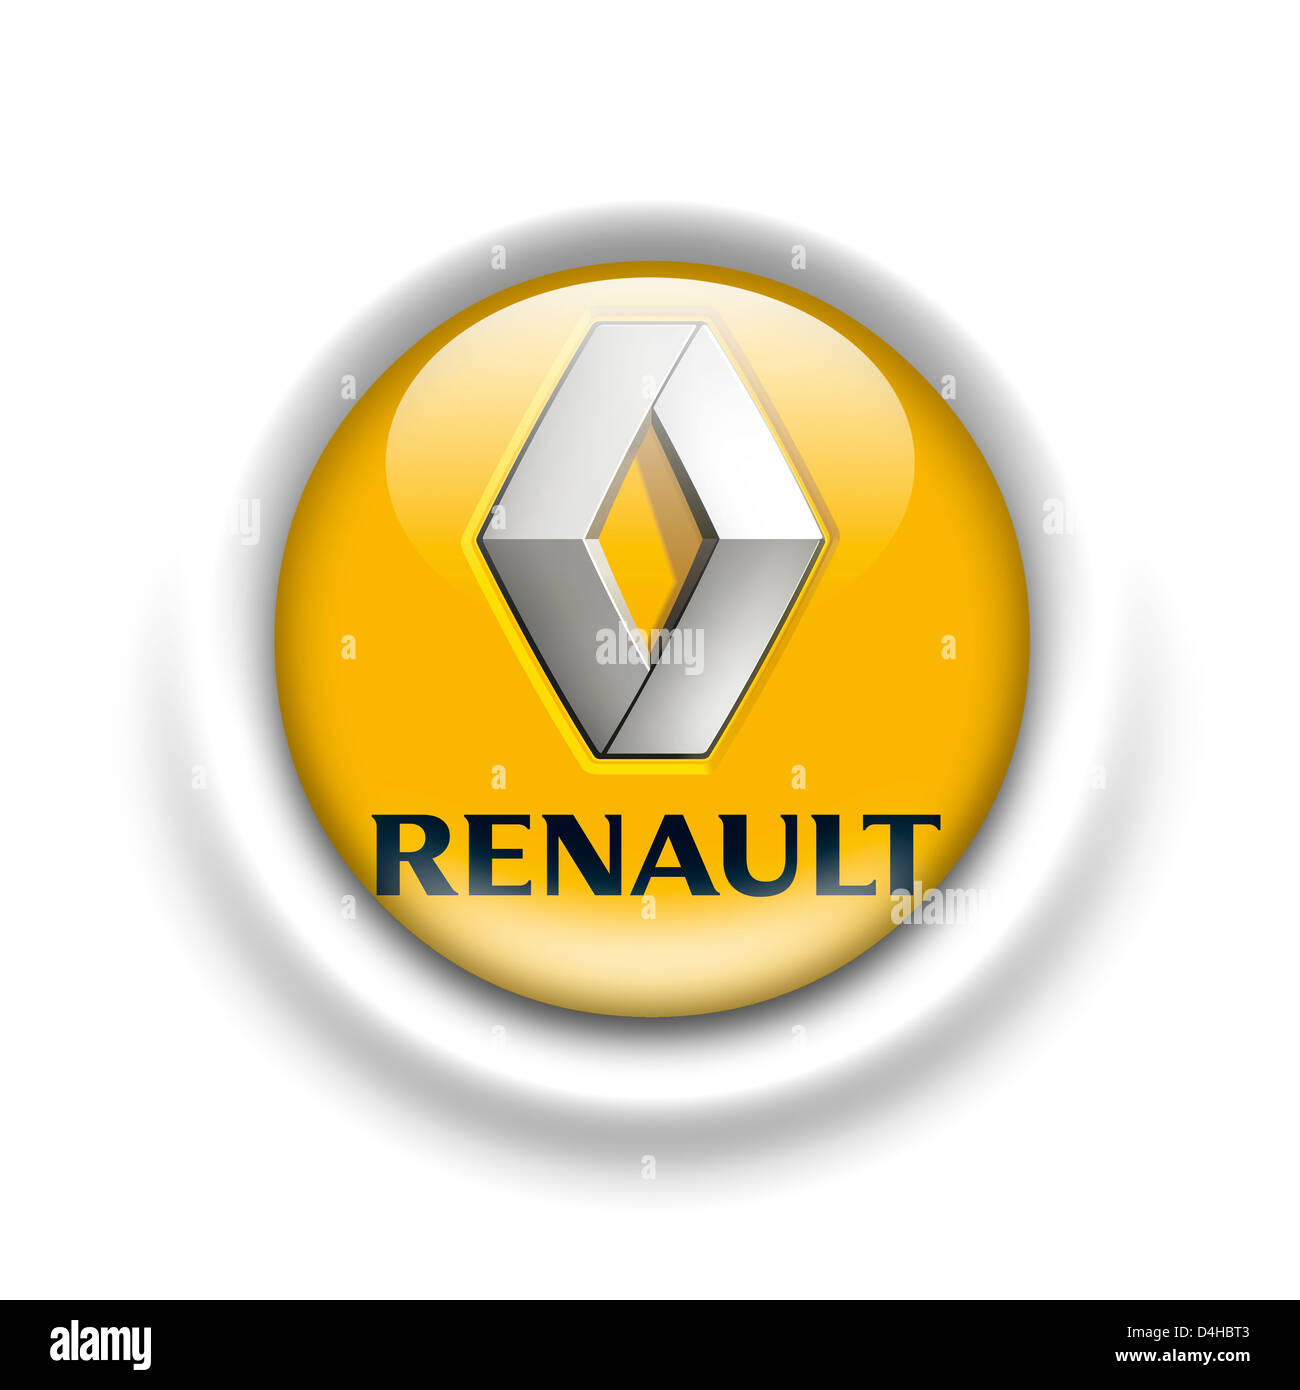 Renault logo symbol icon flag Stock Photo - Alamy